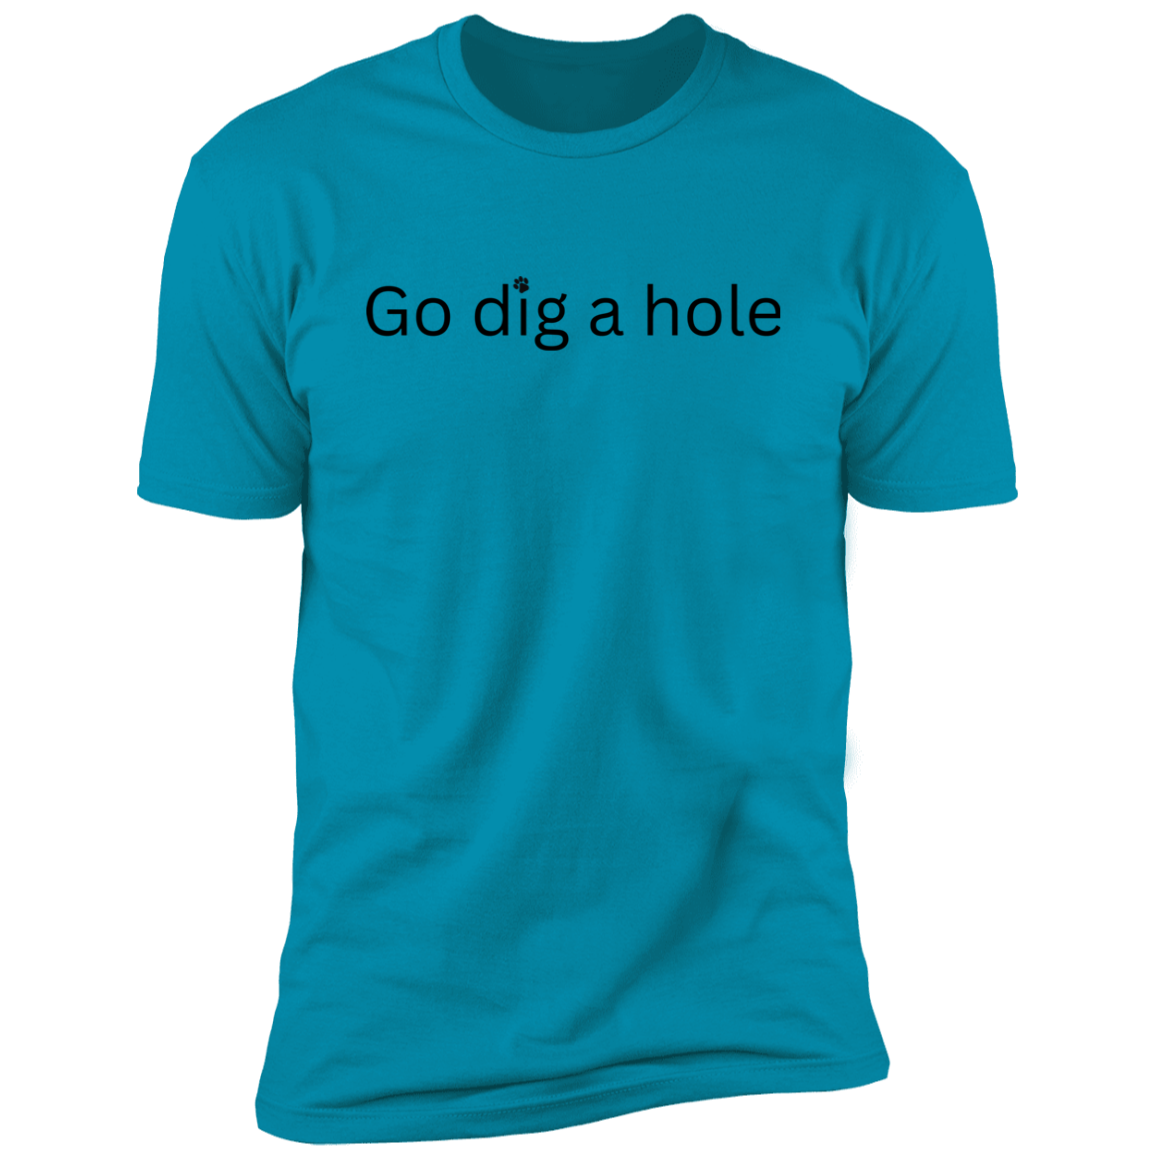 Go Dig a Hole Dog T-Shirt, Dog shirt for humans, funny dog shirt, funny t-shirt, in turquois 